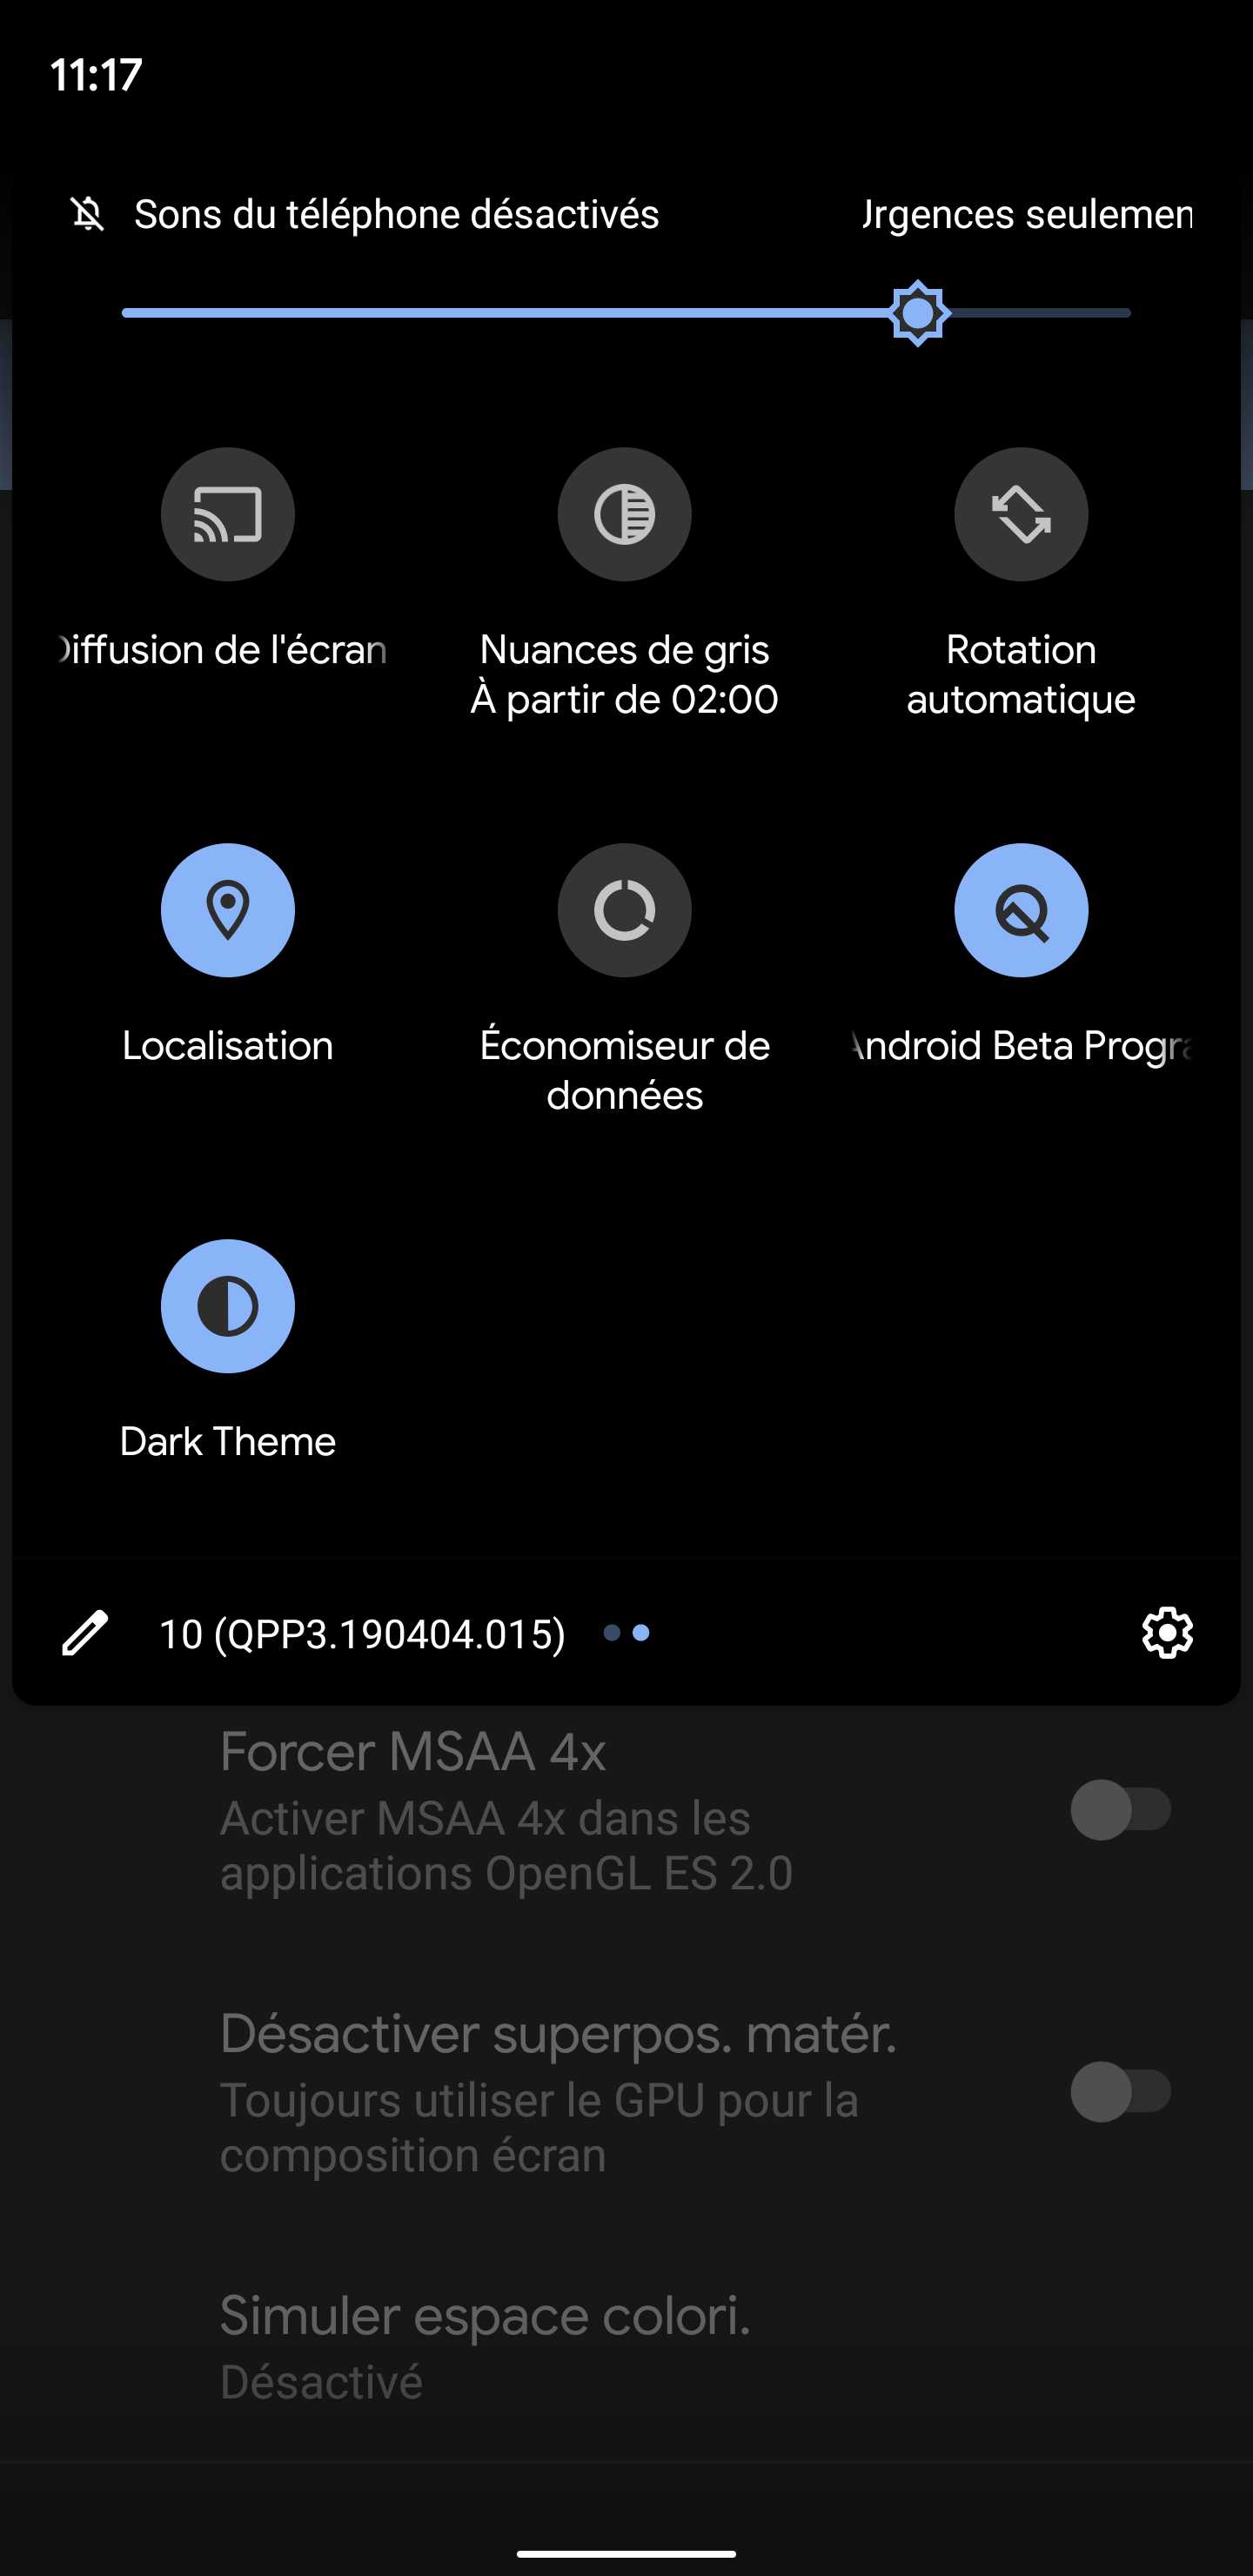 Dark Theme activé Android 10 Q